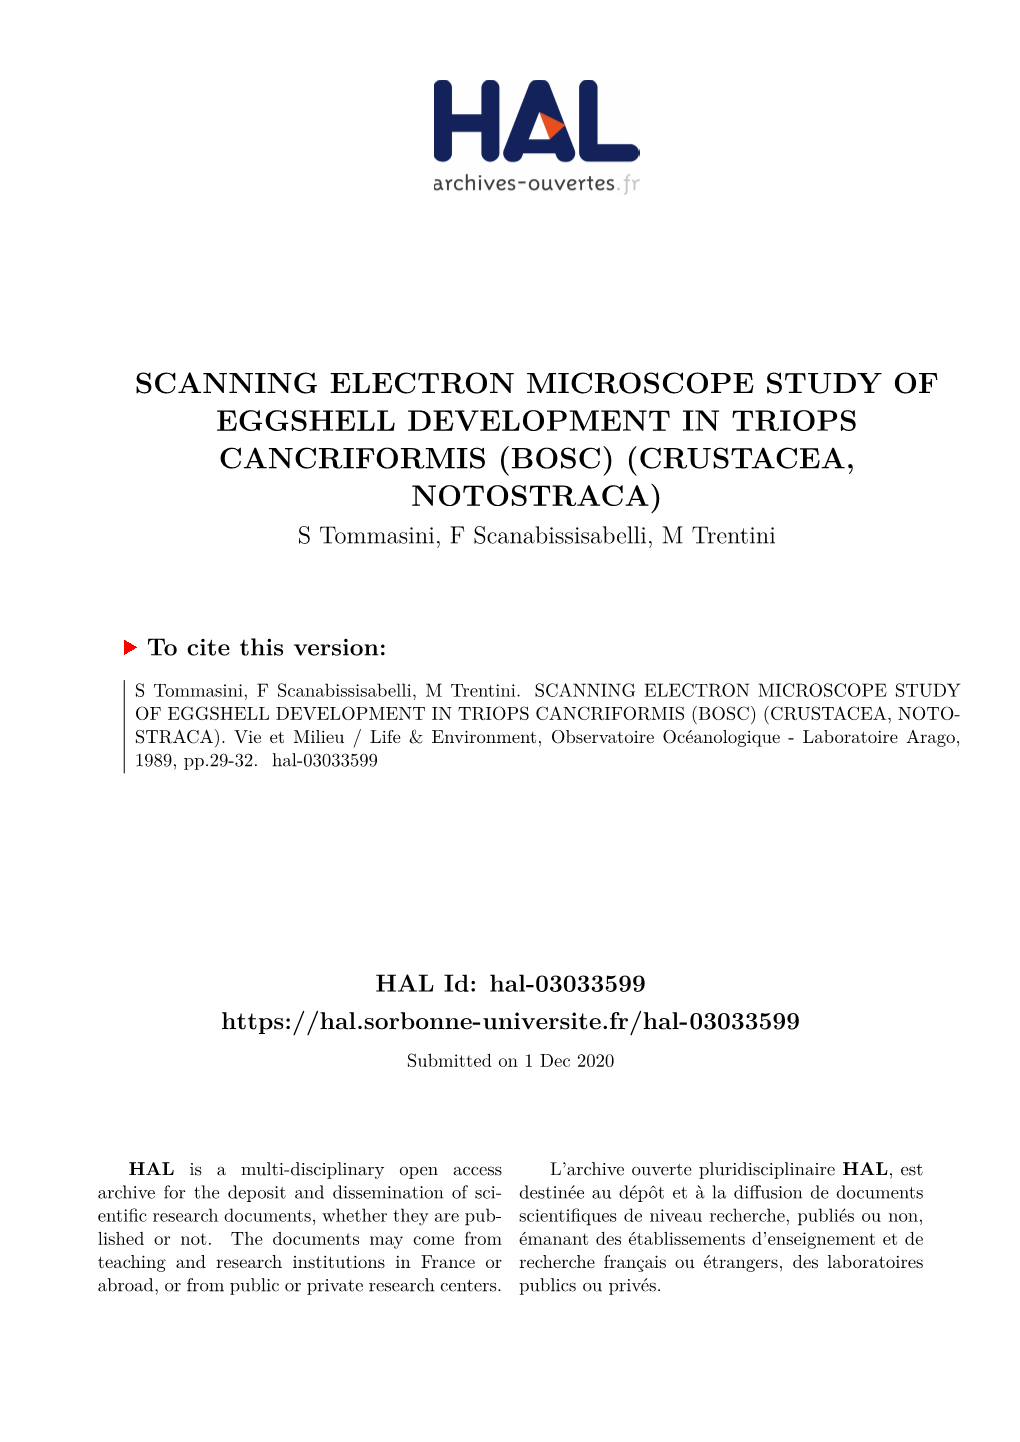 SCANNING ELECTRON MICROSCOPE STUDY of EGGSHELL DEVELOPMENT in TRIOPS CANCRIFORMIS (BOSC) (CRUSTACEA, NOTOSTRACA) S Tommasini, F Scanabissisabelli, M Trentini